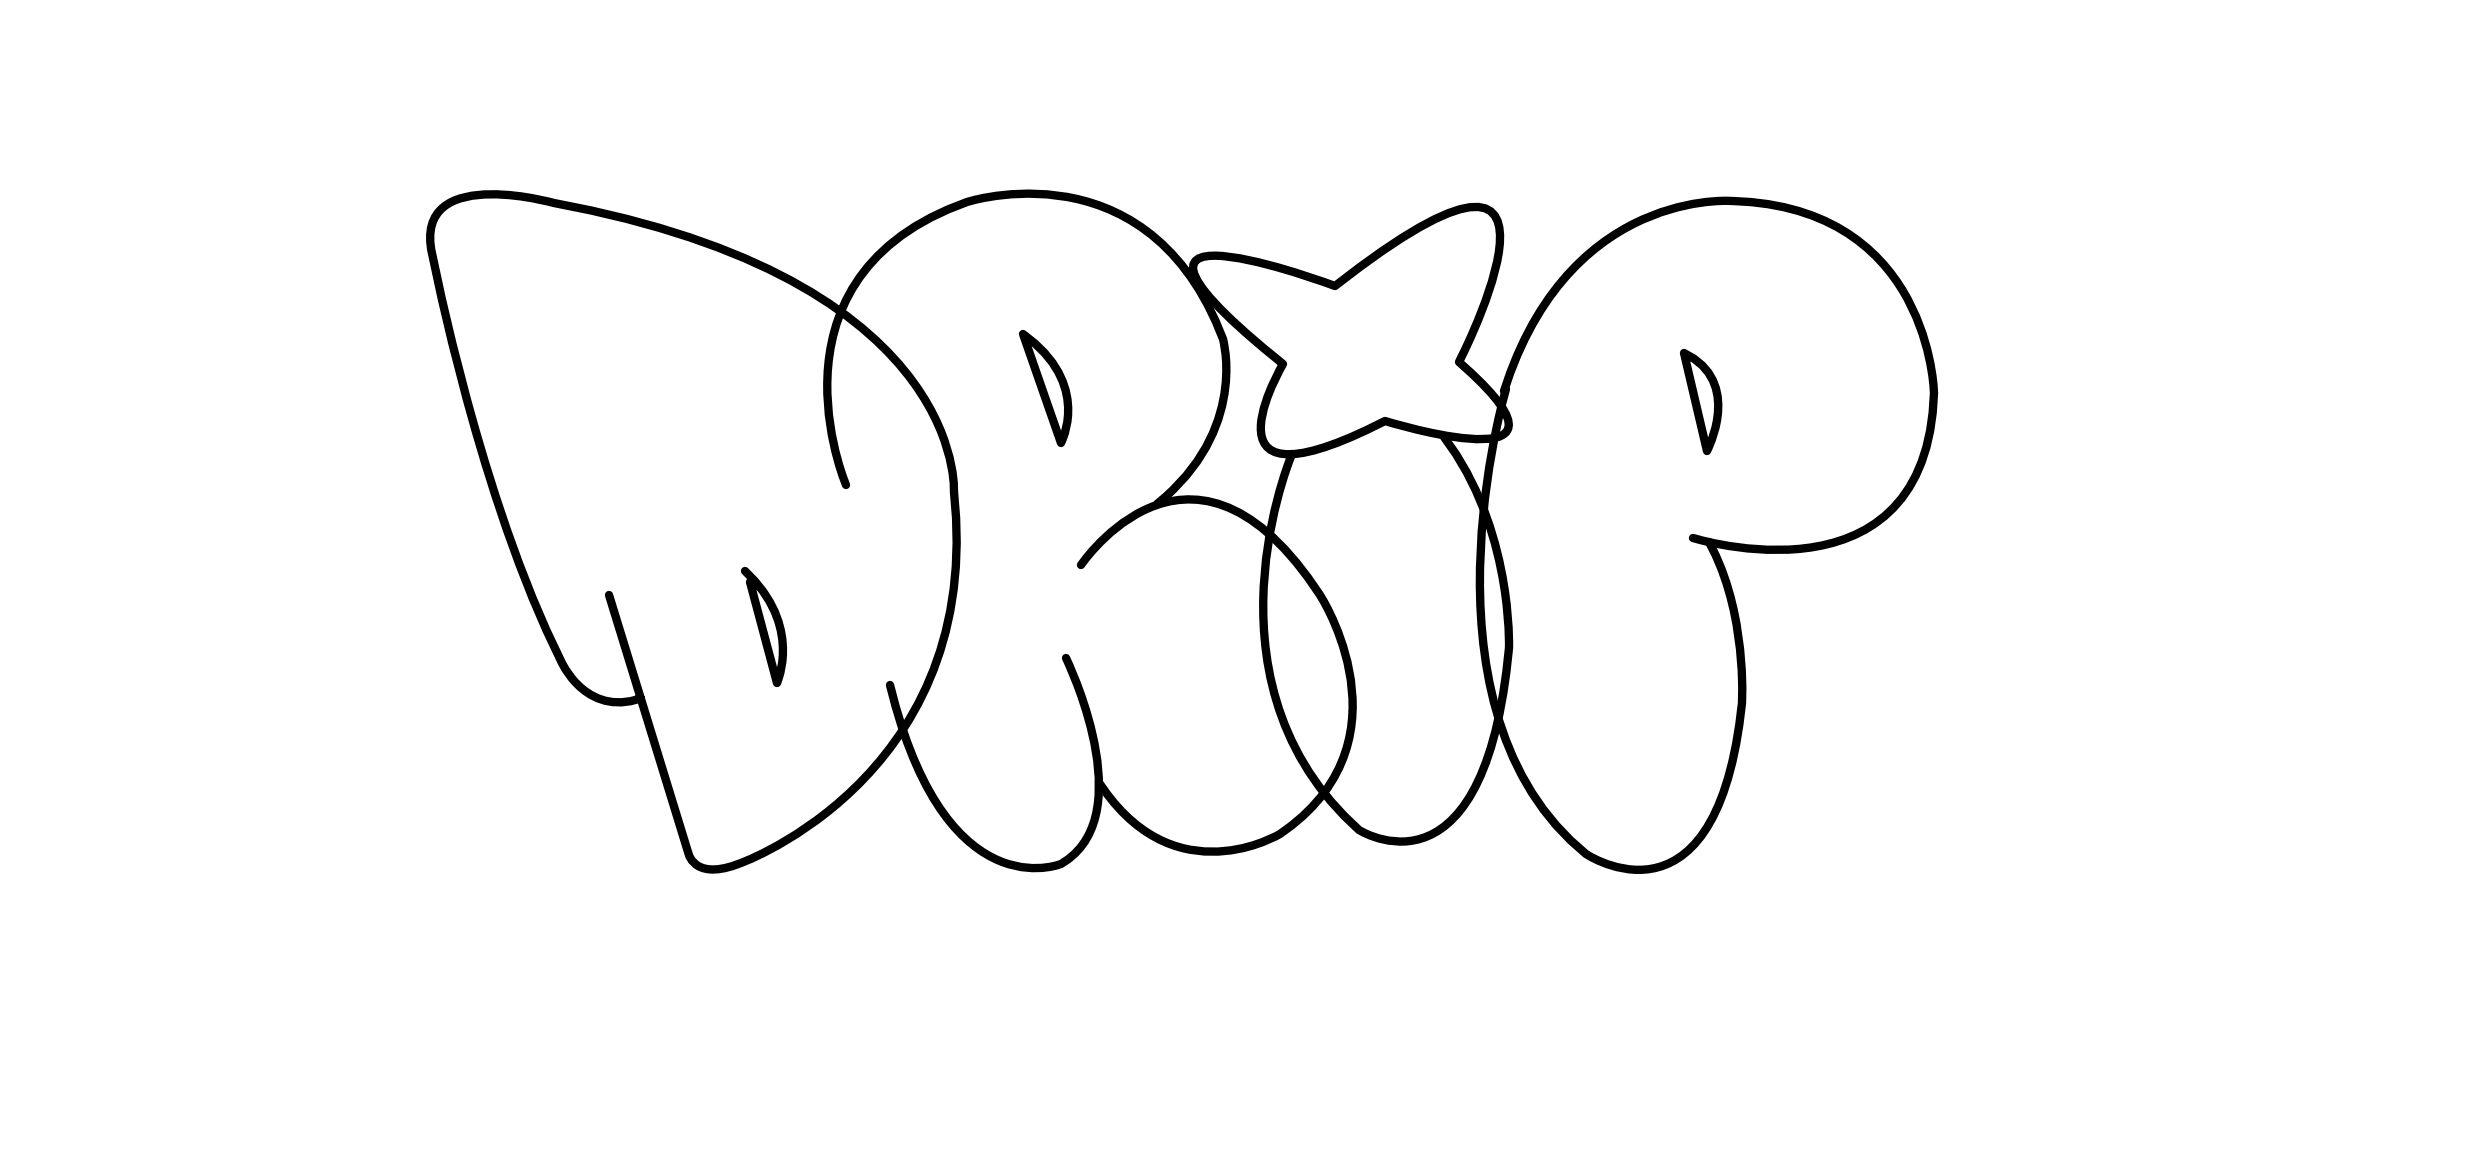 drip Graffiti Tutorial Step 4 graphic